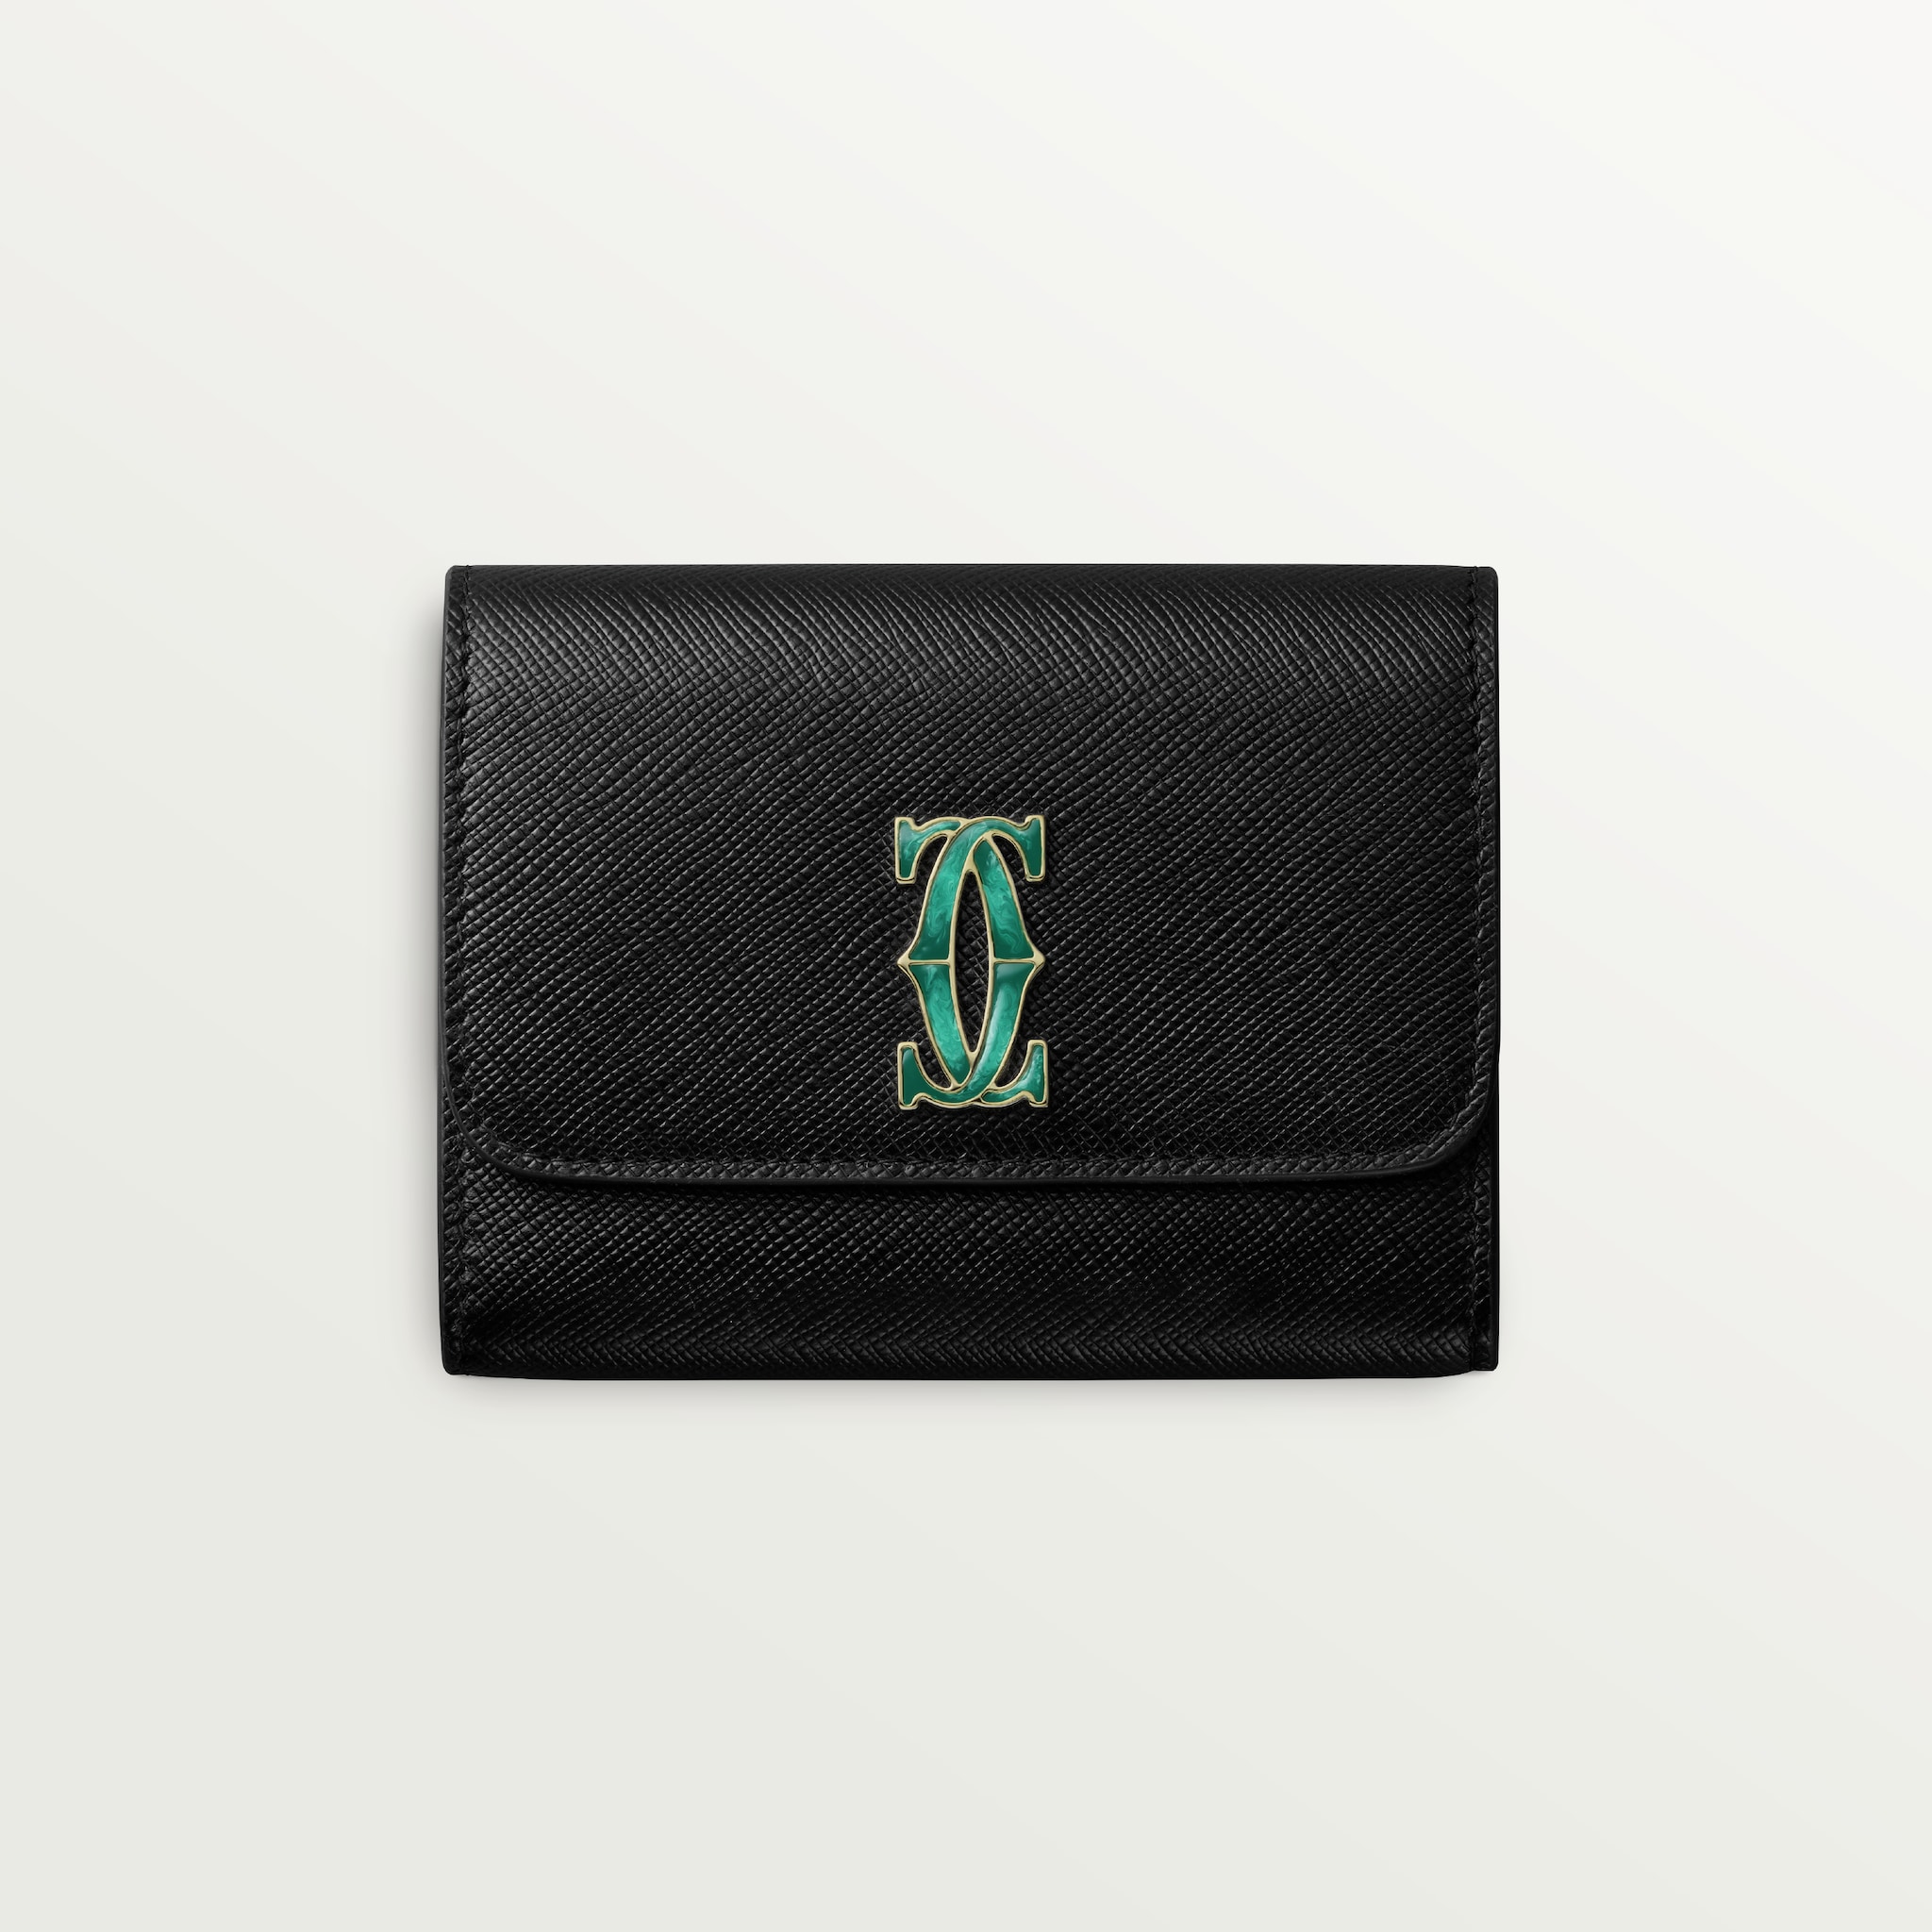 Mini wallet, C de CartierBlack textured calfskin, golden finish and graduated green enamel